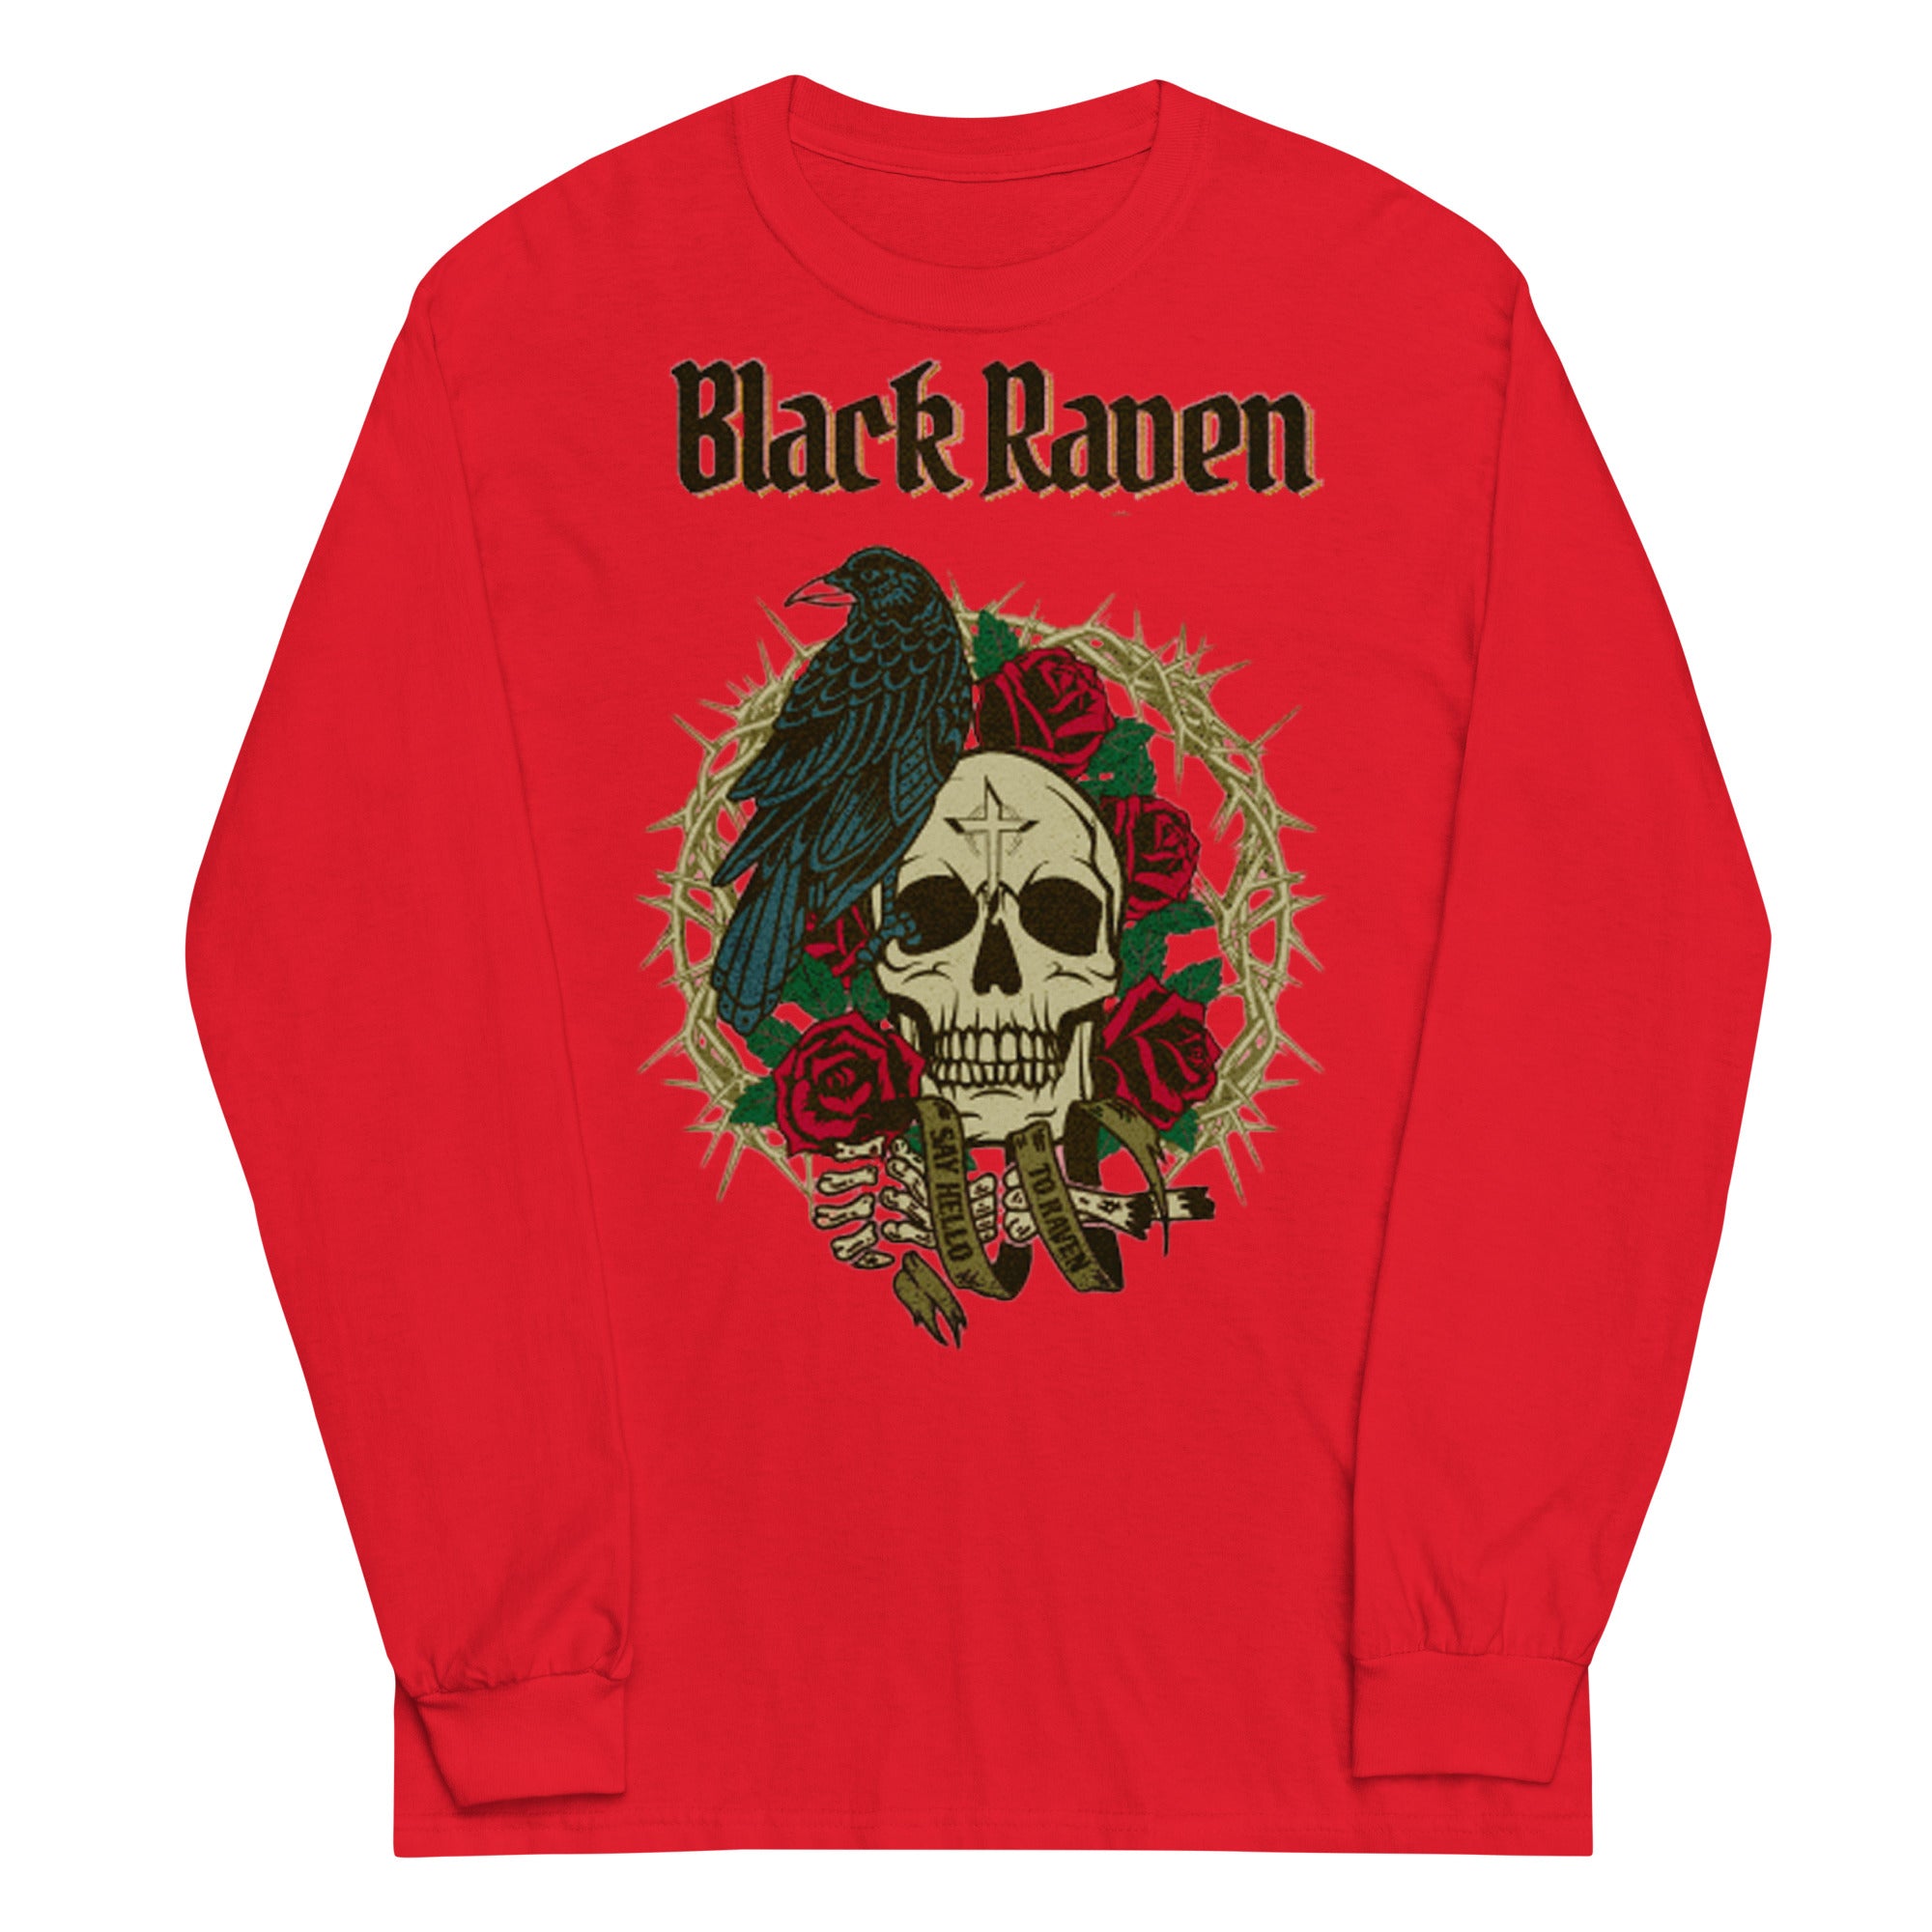 Black Raven Men's Long Sleeve Shirt